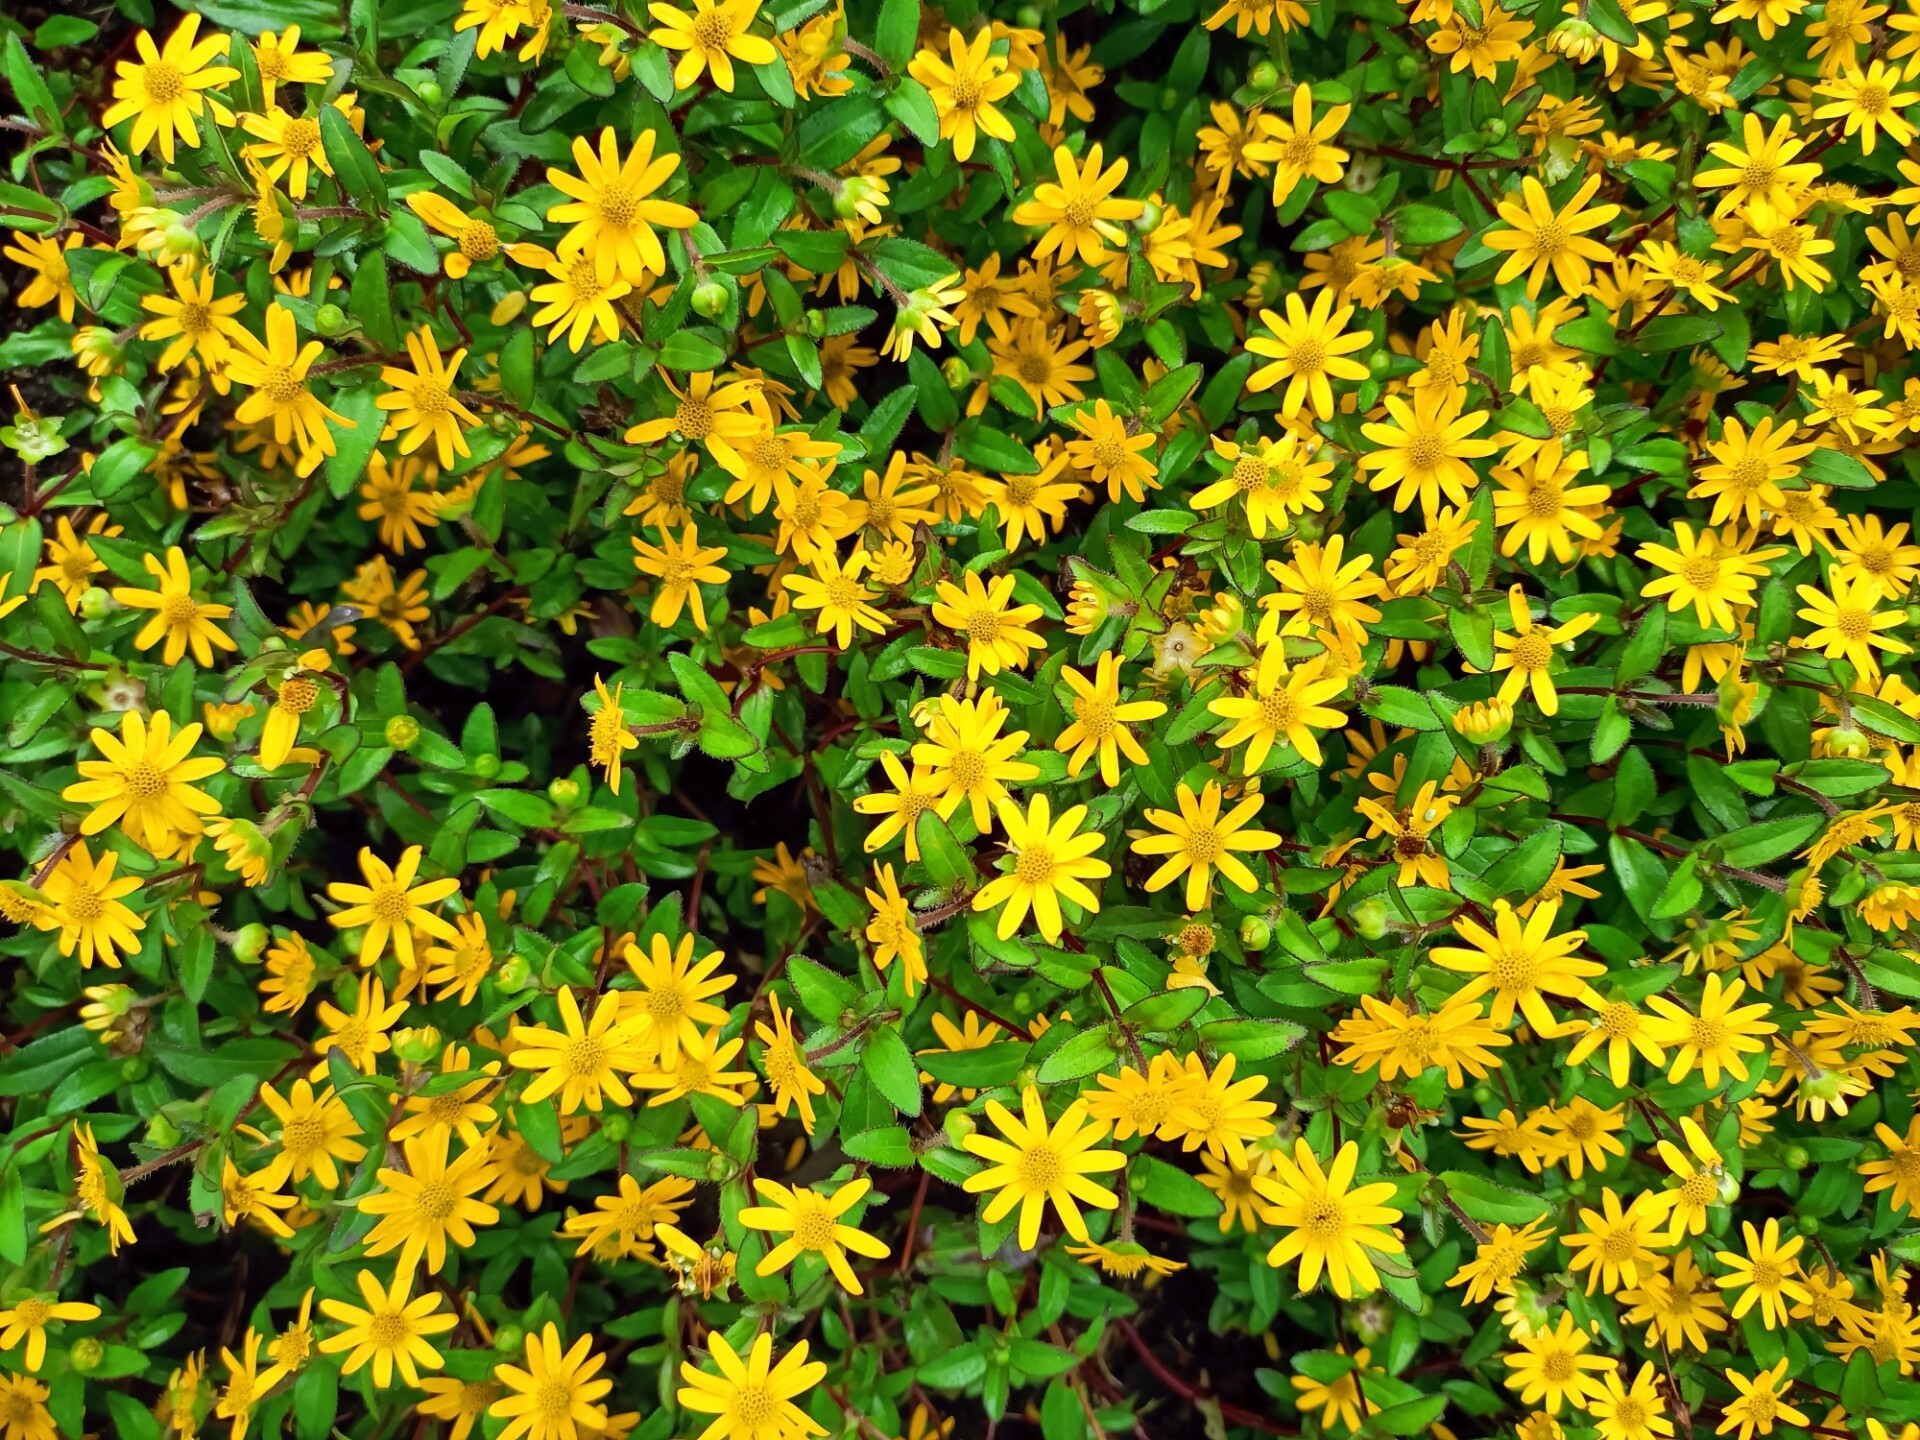 Yellow flowers background - Photo #9302 - motosha | Free Stock Photos